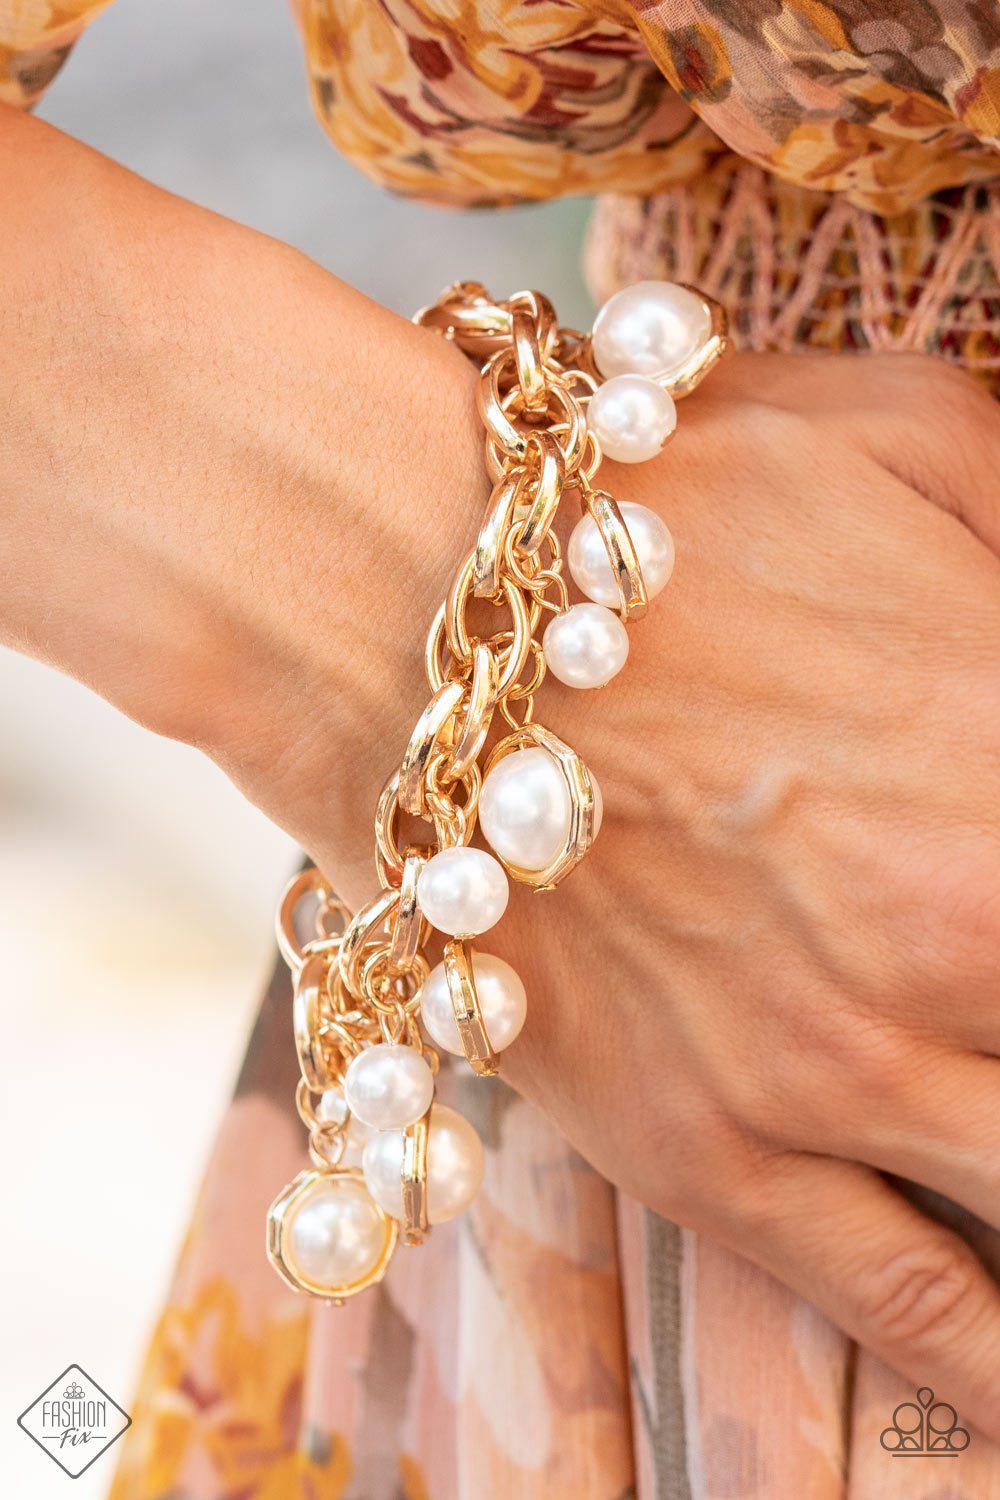 Fiercely 5th Avenue Complete Trend Blend (4 pc set) August 2021 - Paparazzi Accessories Fashion Fix - Bracelet -CarasShop.com - $5 Jewelry by Cara Jewels